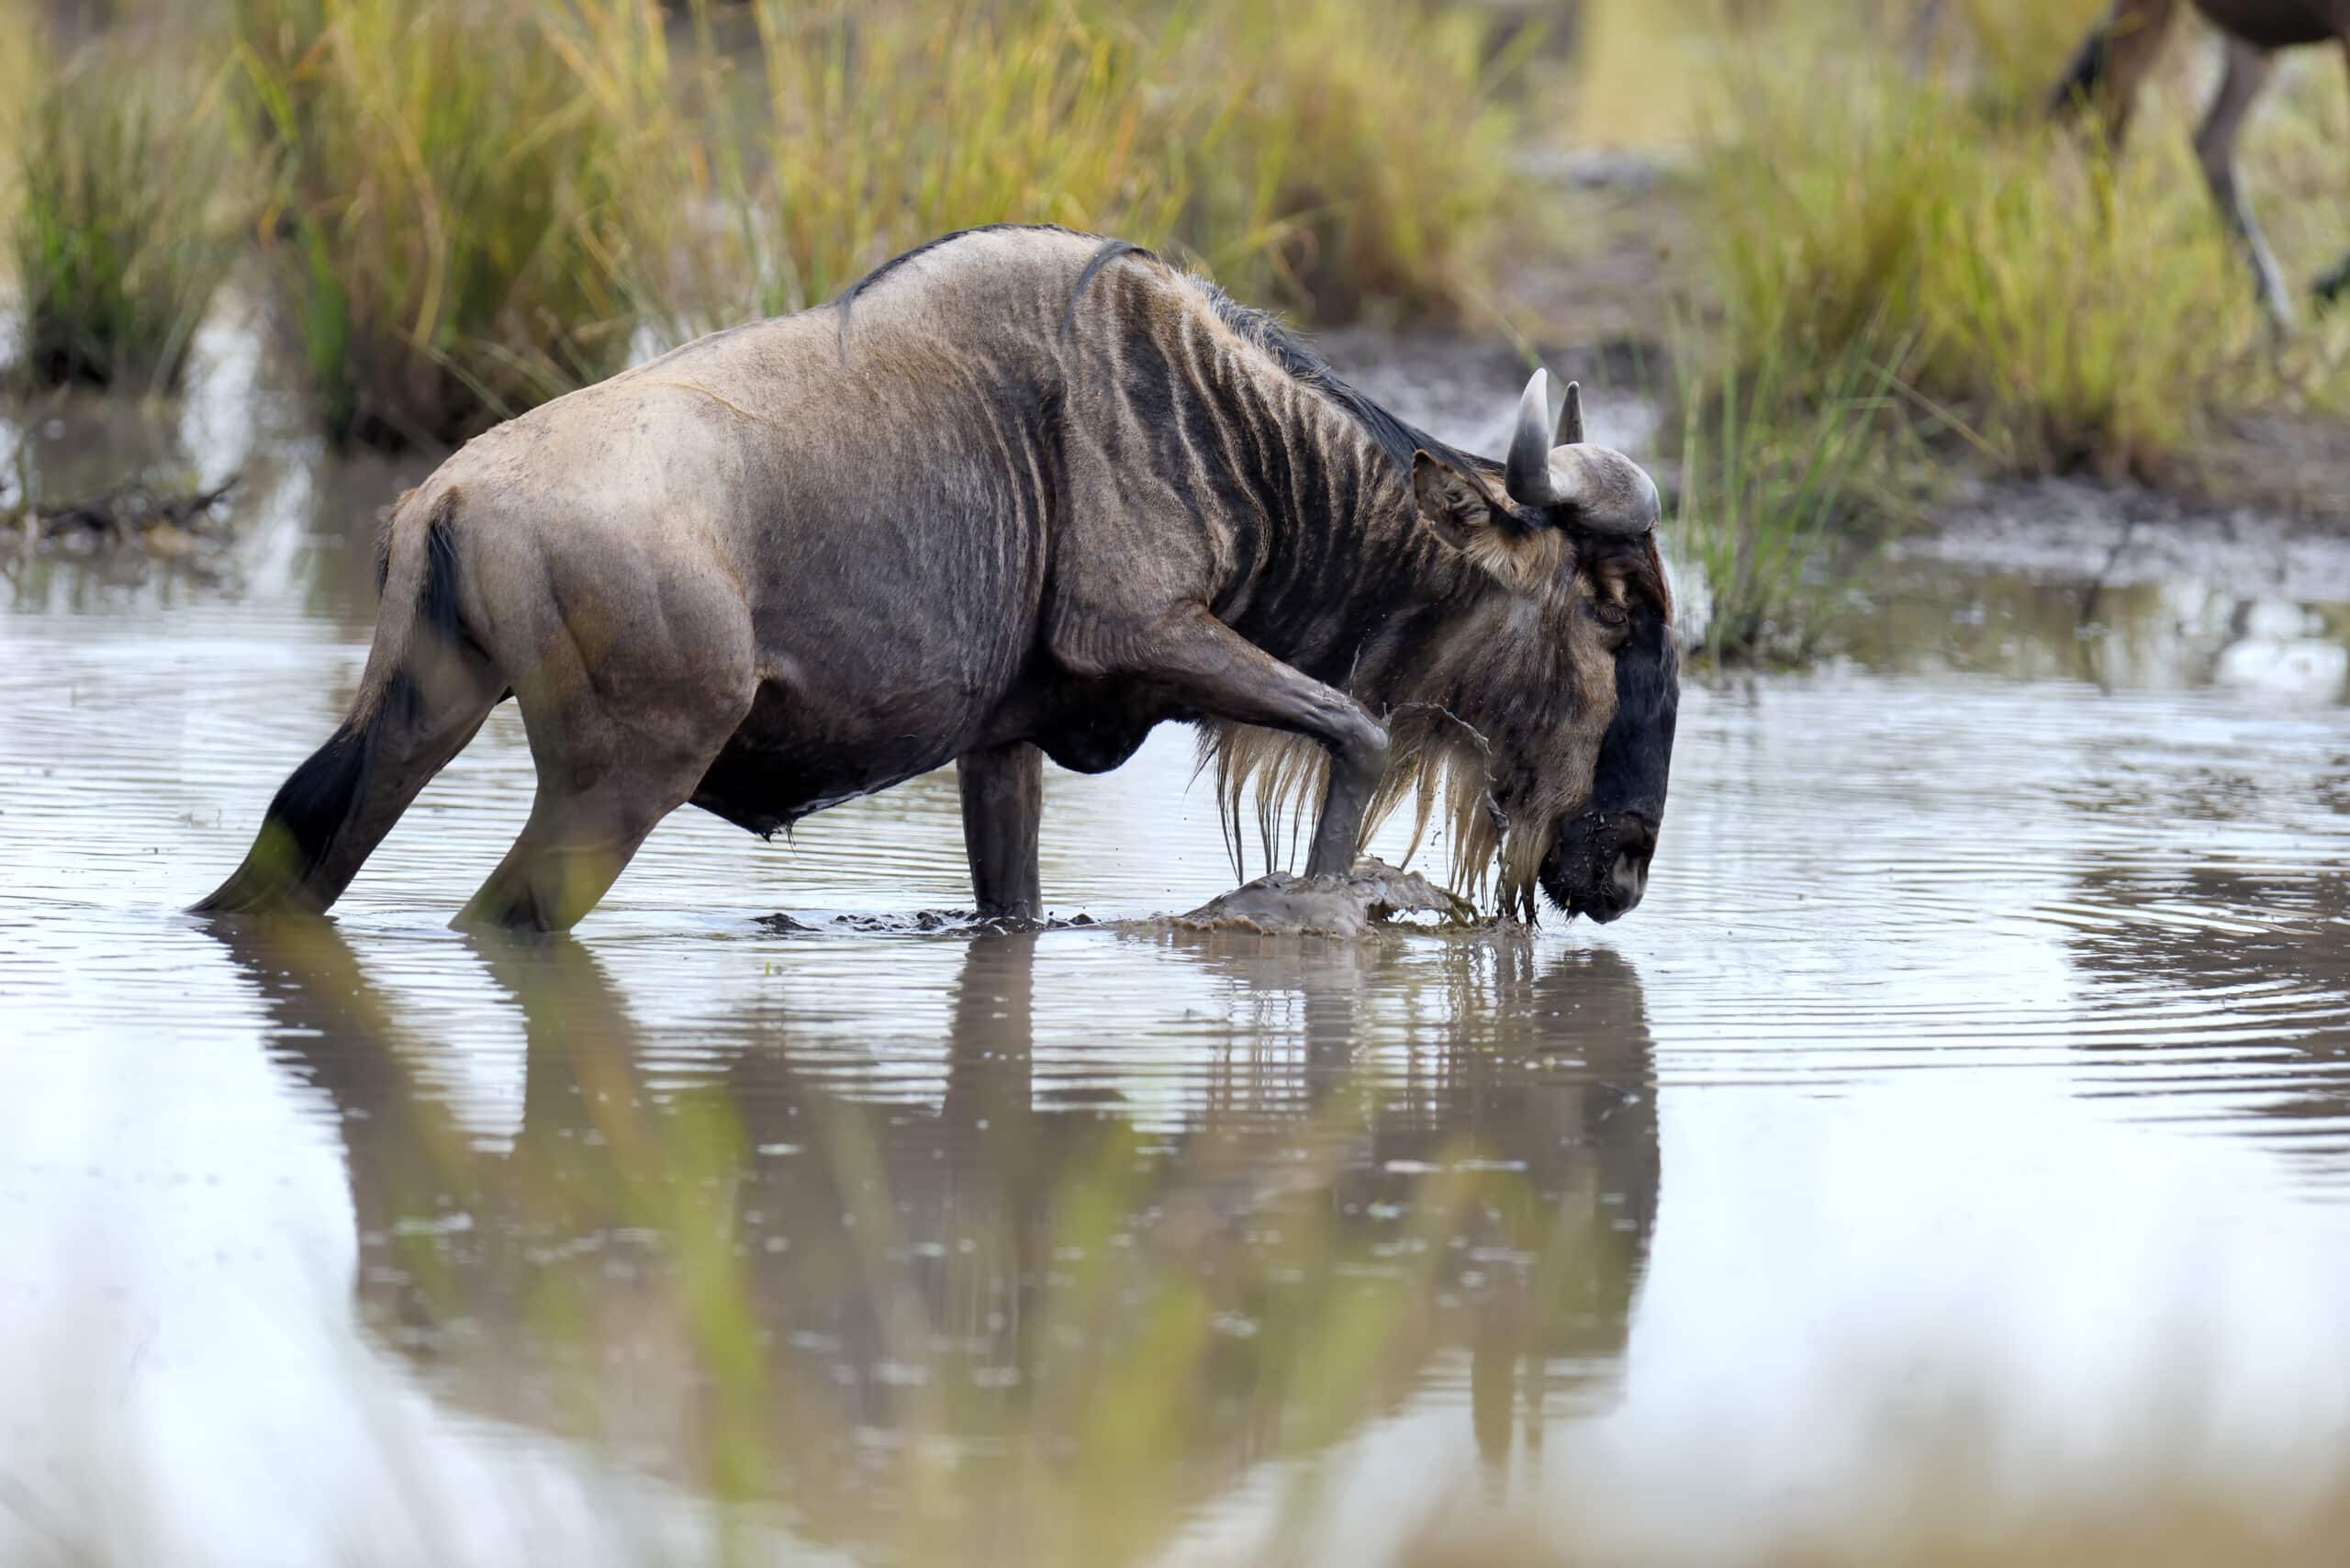 wildebeest in national park of kenya 2021 08 26 15 55 38 utc 1 scaled